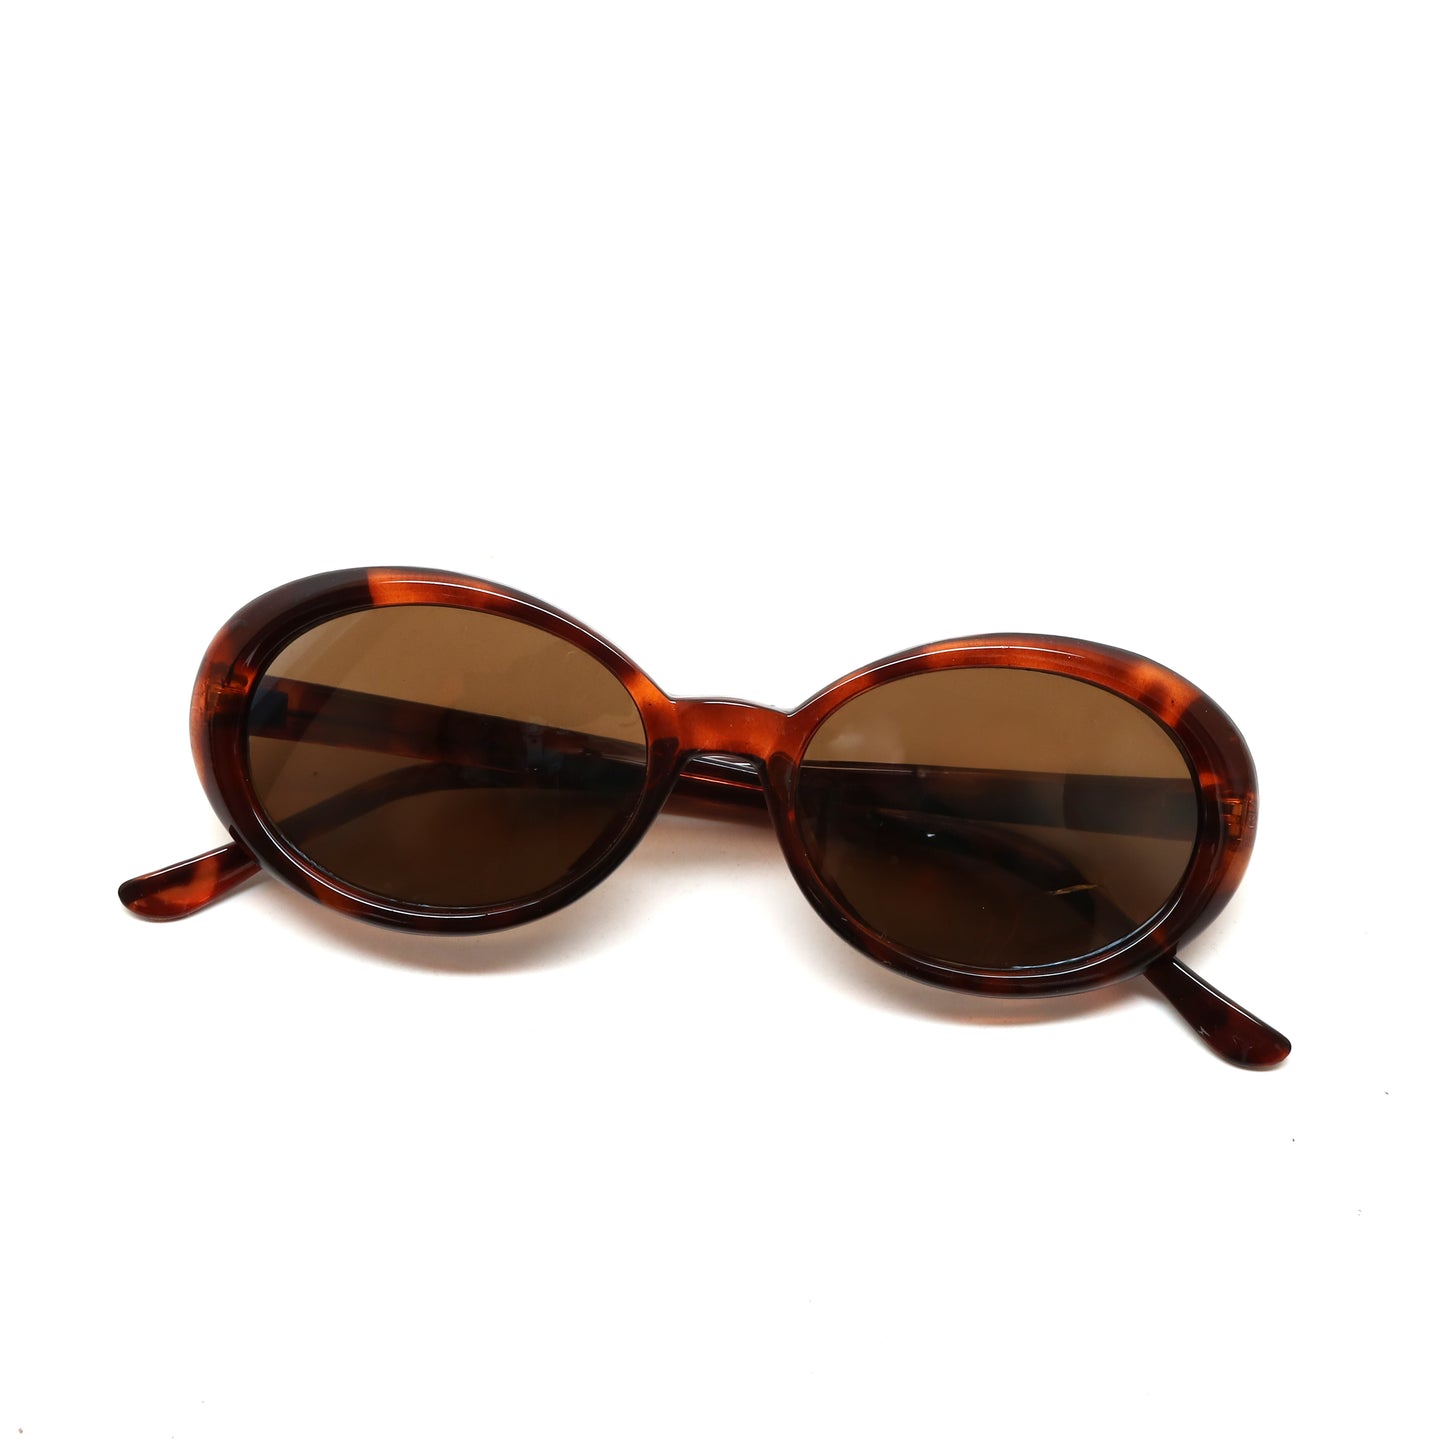 Vintage Standard Size 90s Mod Original Hermosa Oval Sunglasses - Tortoise Brown